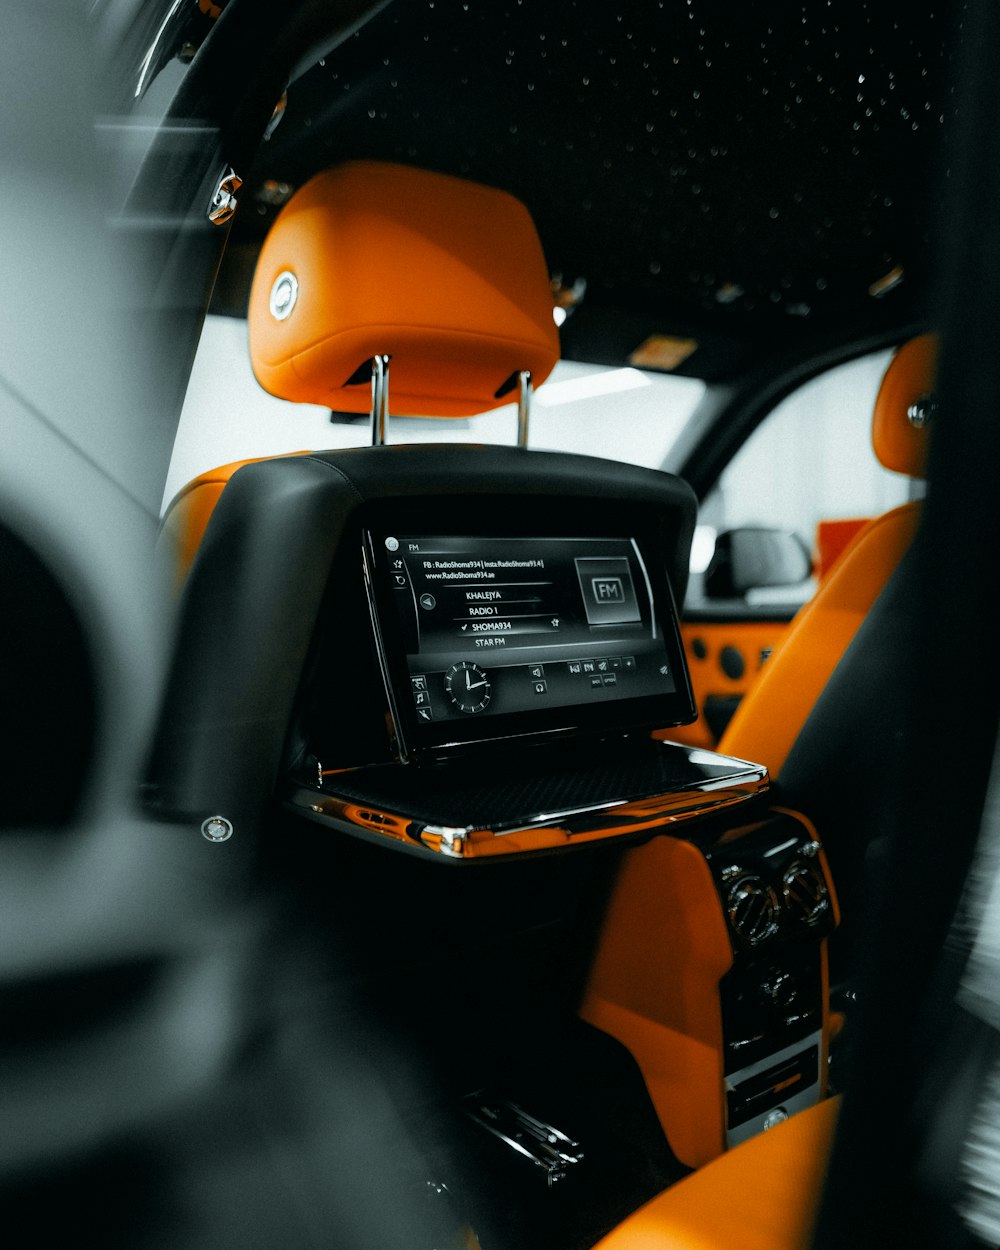 the interior of a car with orange and black trim